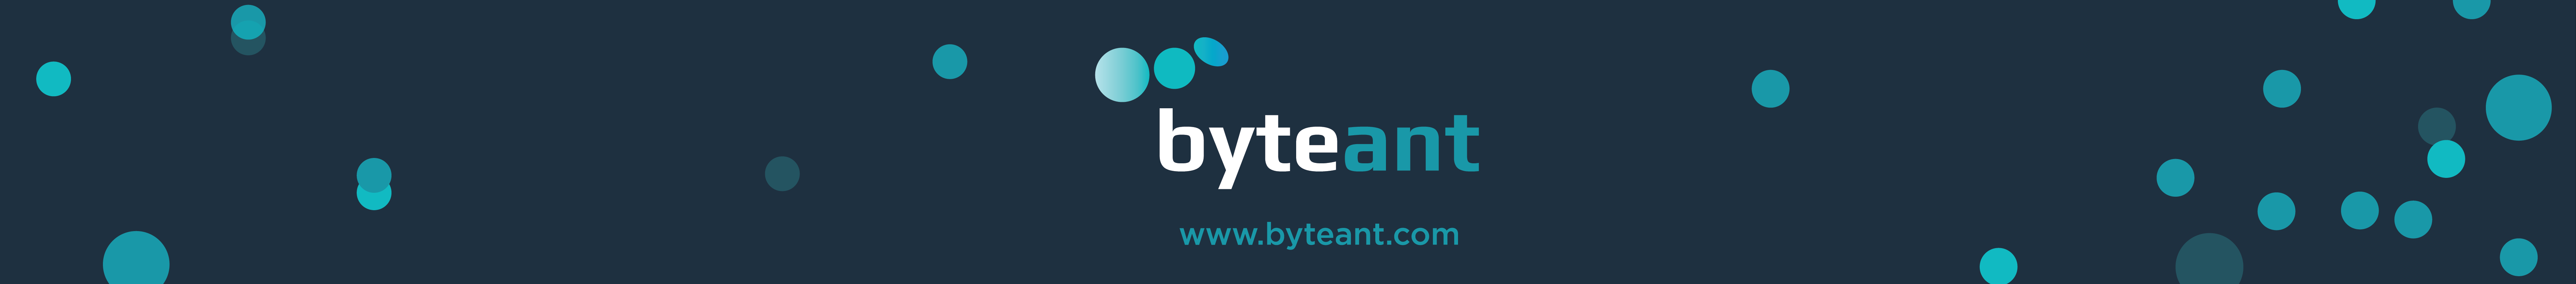 ByteAnt Design's profile banner